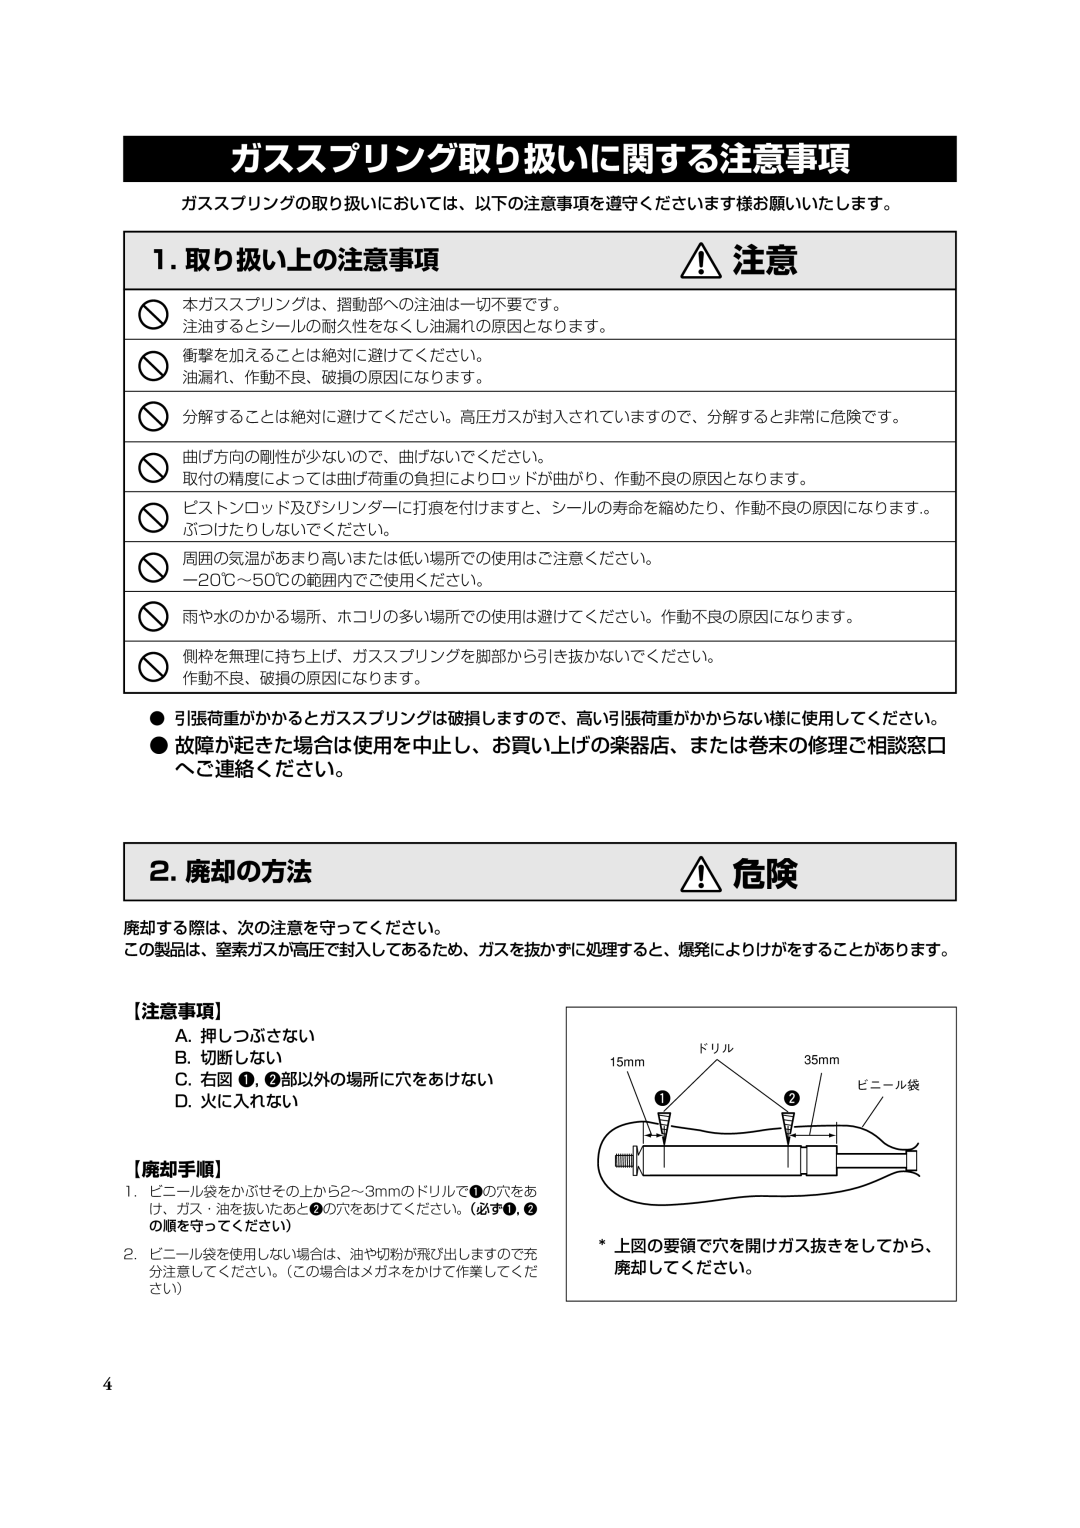 Yamaha Concert Marimba ガススプリング取り扱いに関する注意事項, 【注意事項】, 【廃却手順】, 1. 取り扱い上の注意事項, 2. 廃却の方法, 廃却する際は、次の注意を守ってください。, 廃却してください。 